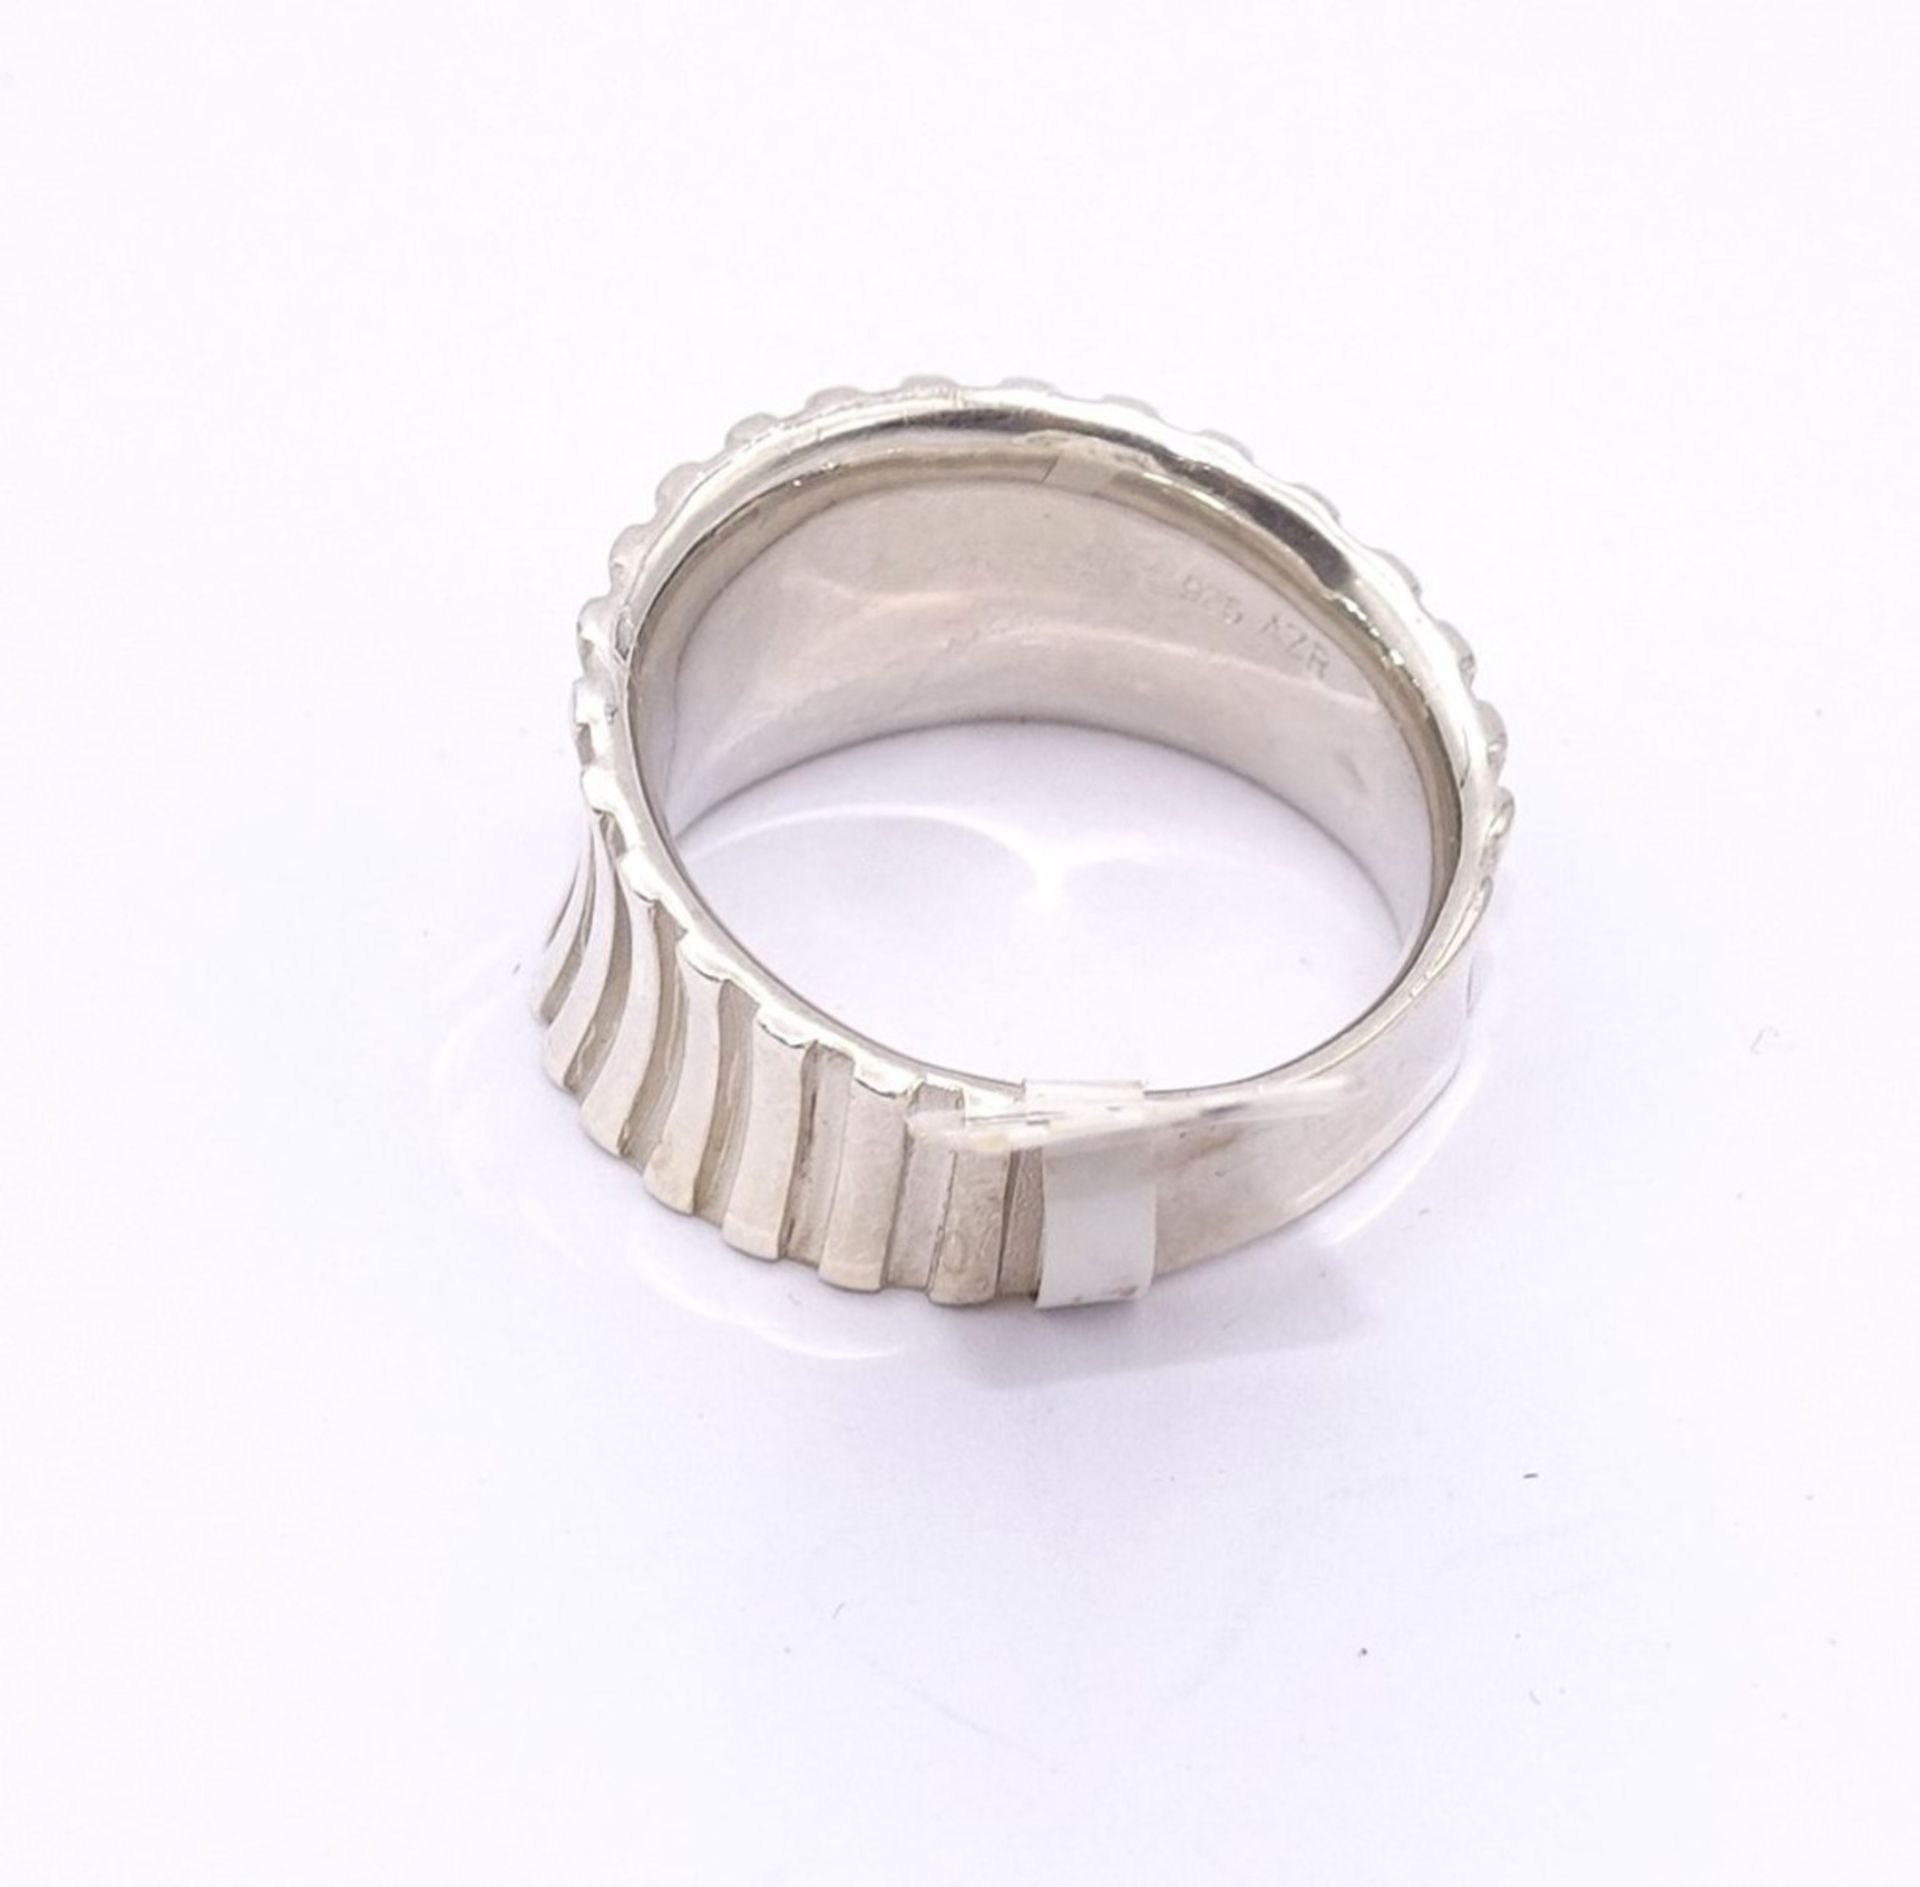 Ring, Sterlingsilber, RG. 64, B. 0,7-1,4 cm, 10,8 gr., gest. "AZR", neuwertig, mit Etikett - Image 3 of 3